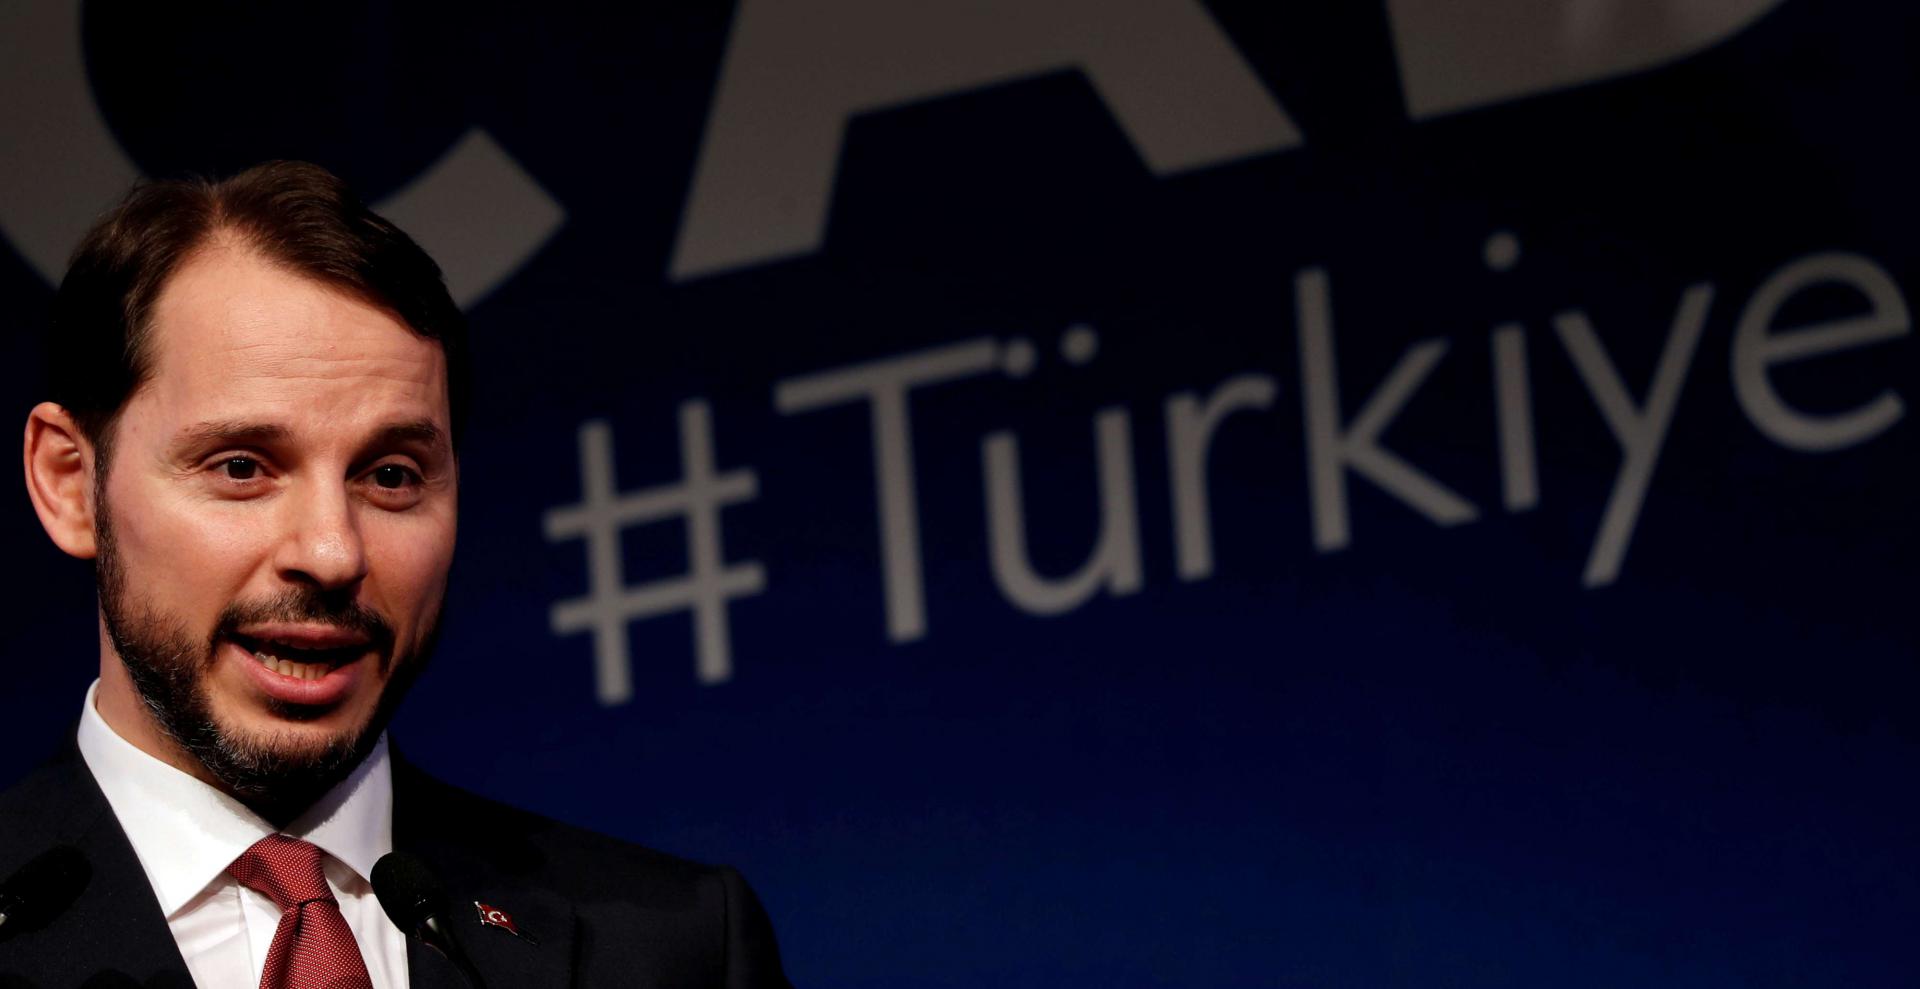 Turkish Finance Minister Berat Albayrak